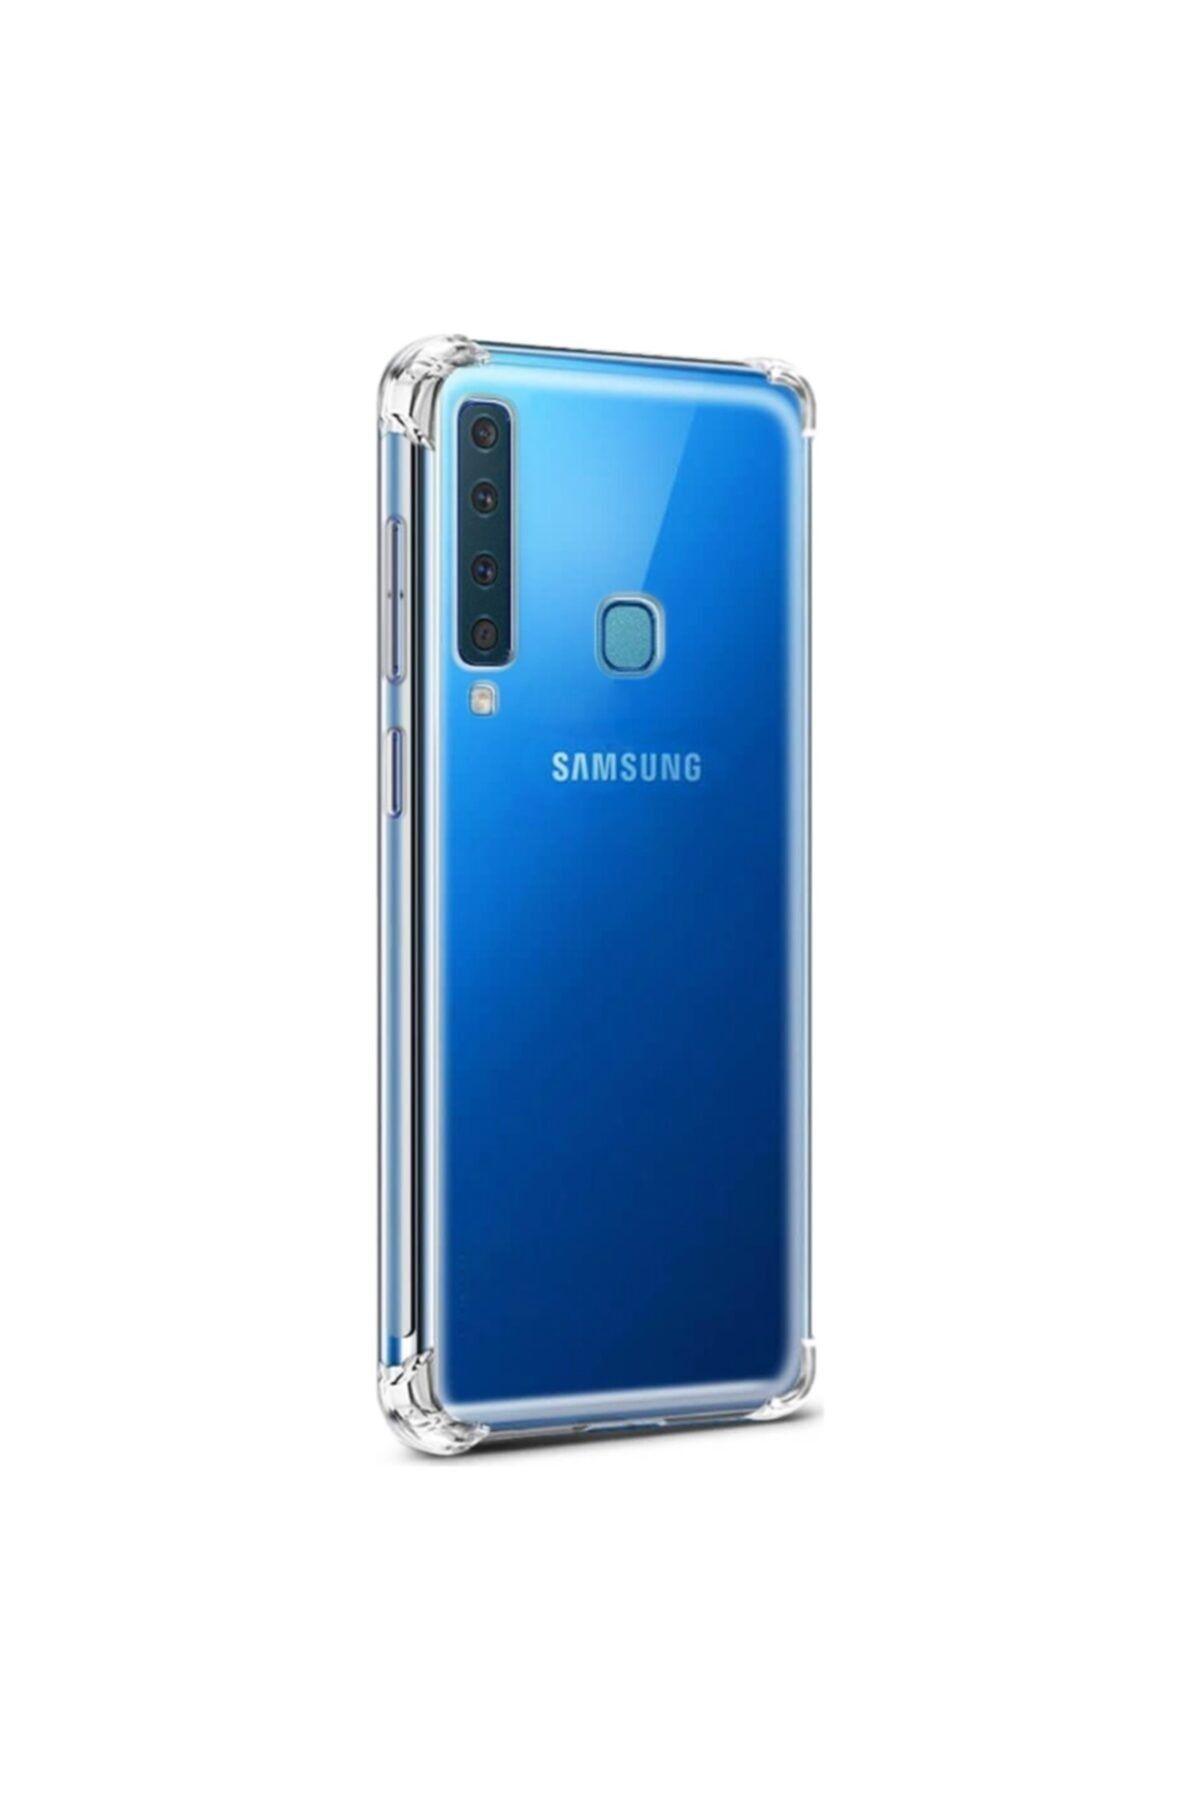 Fibaks Samsung Galaxy A9 2018 Kılıf Crystal Sert Pc Antishock Darbe Emici Kenar Şeffaf Silikon Kapak